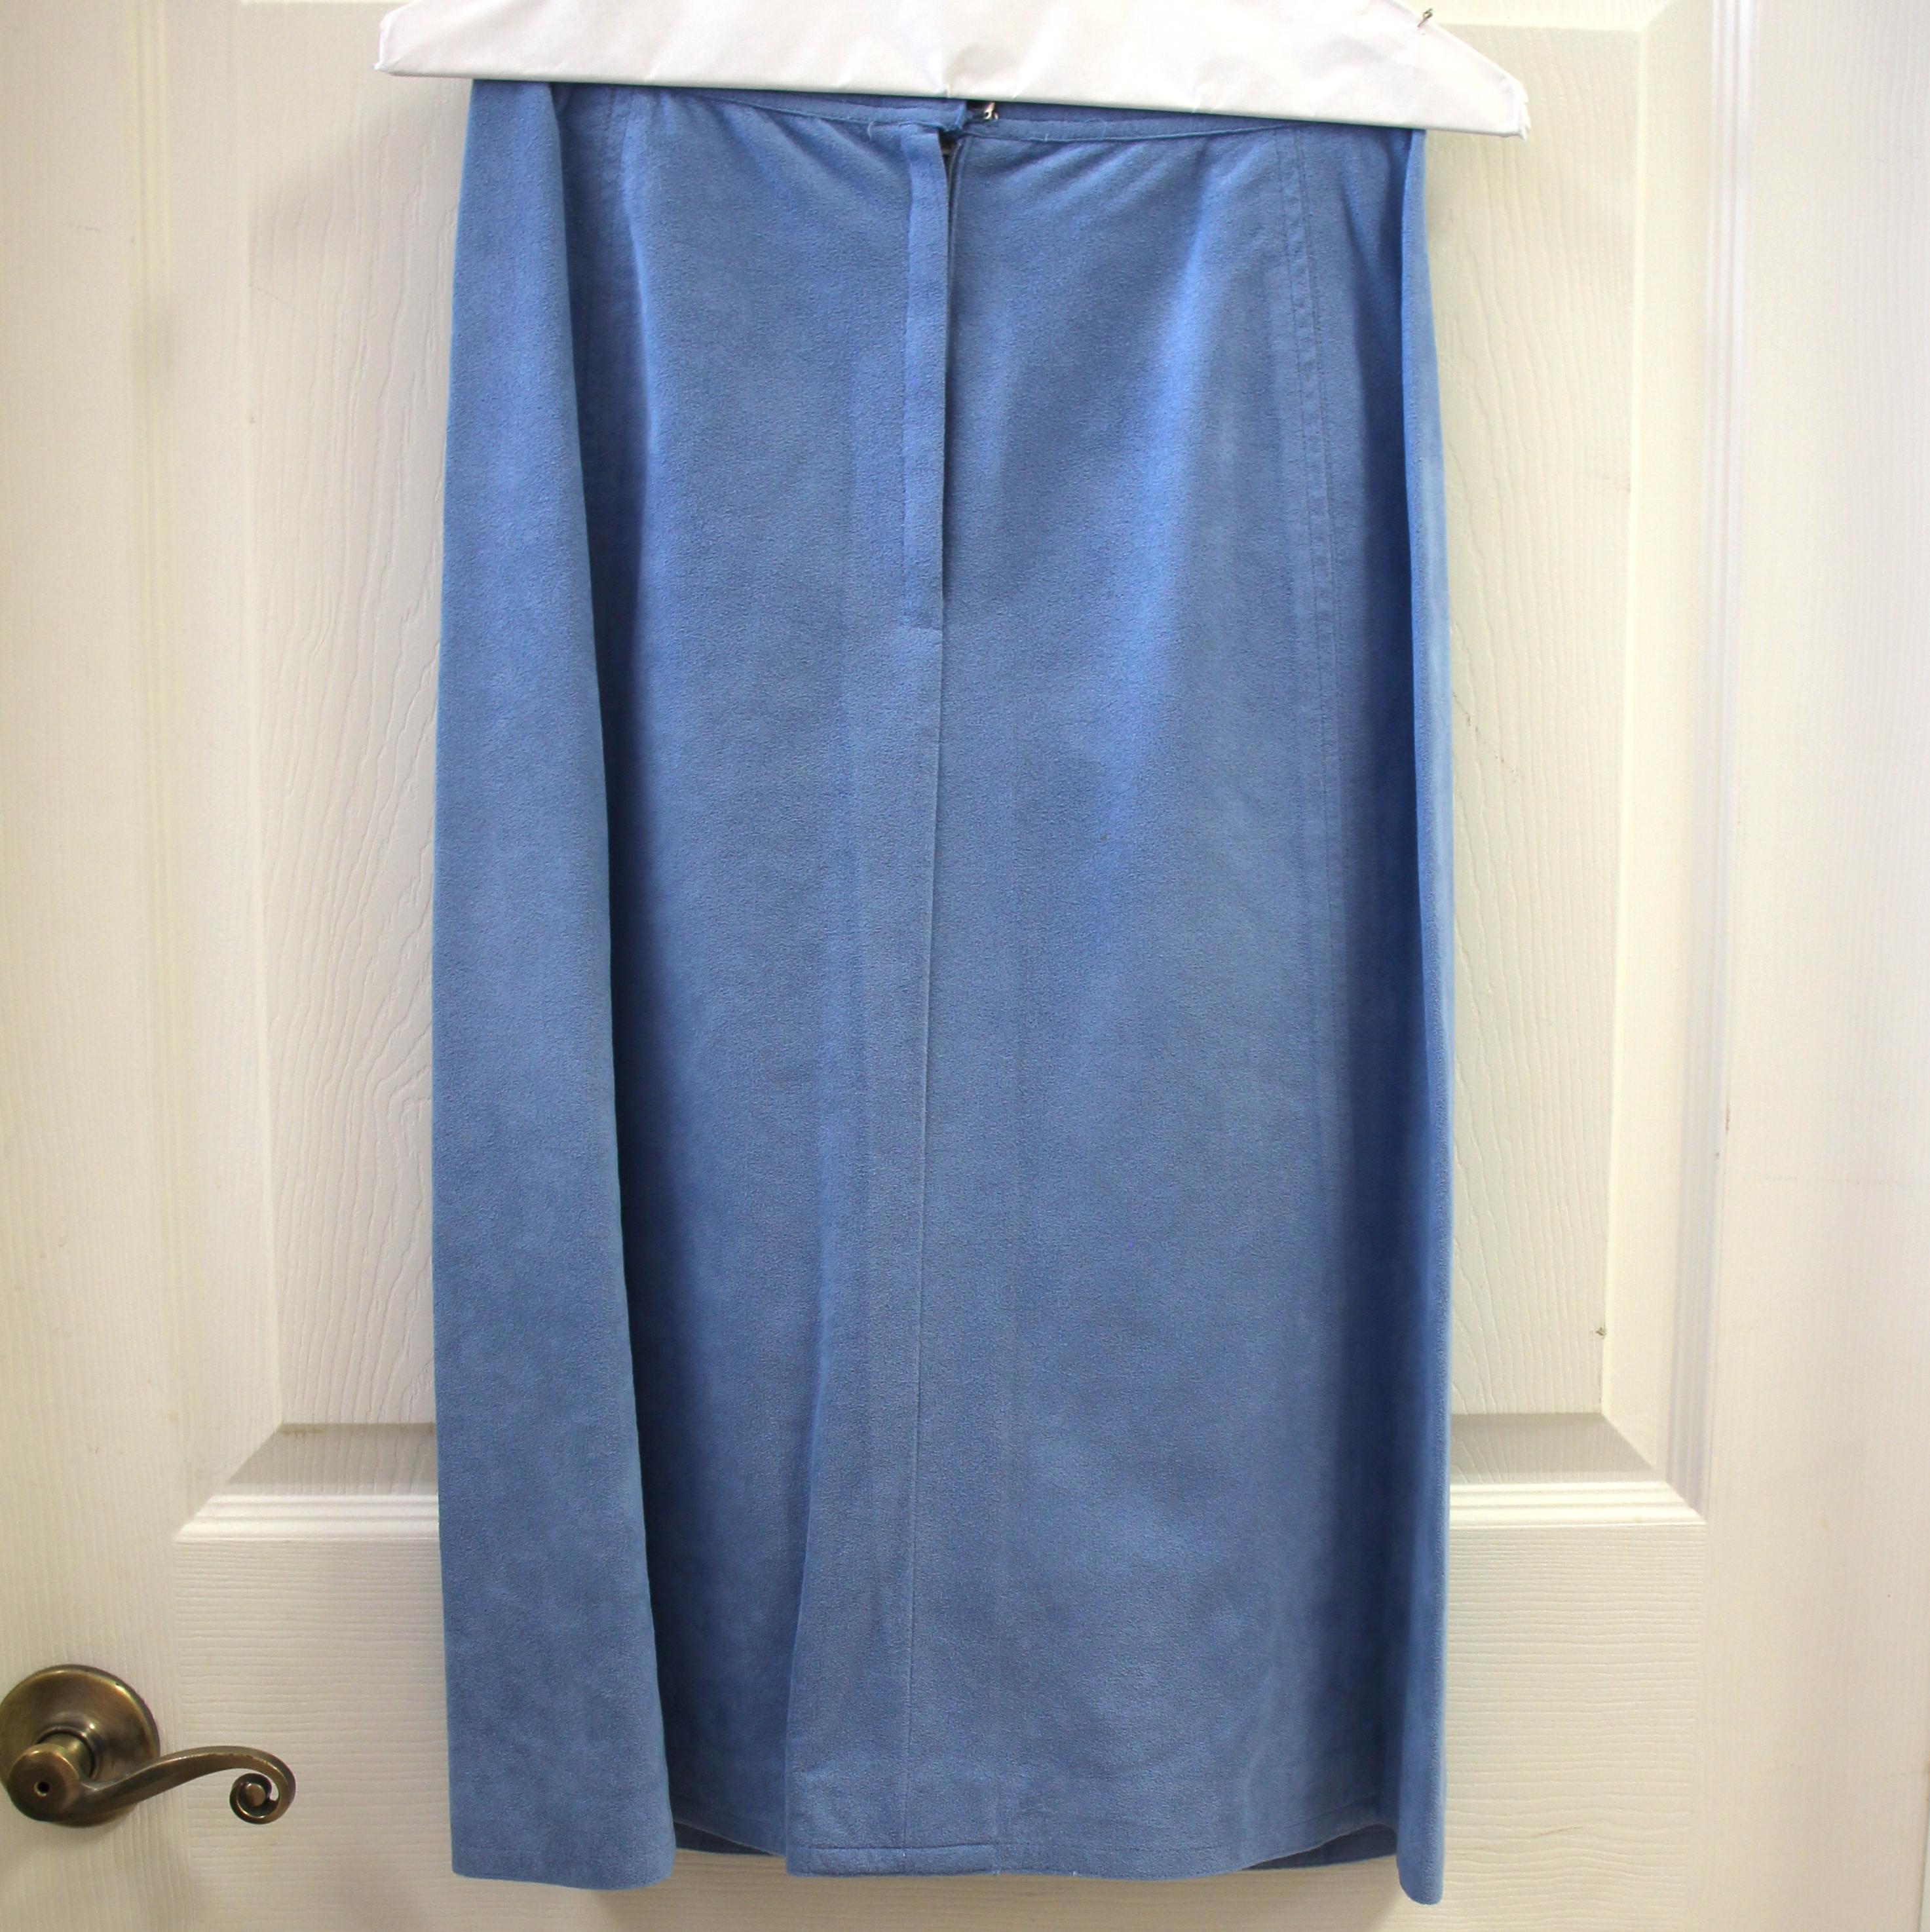 Lillie Rubin Blue Microsuede Skirt & Jacket Suit Set